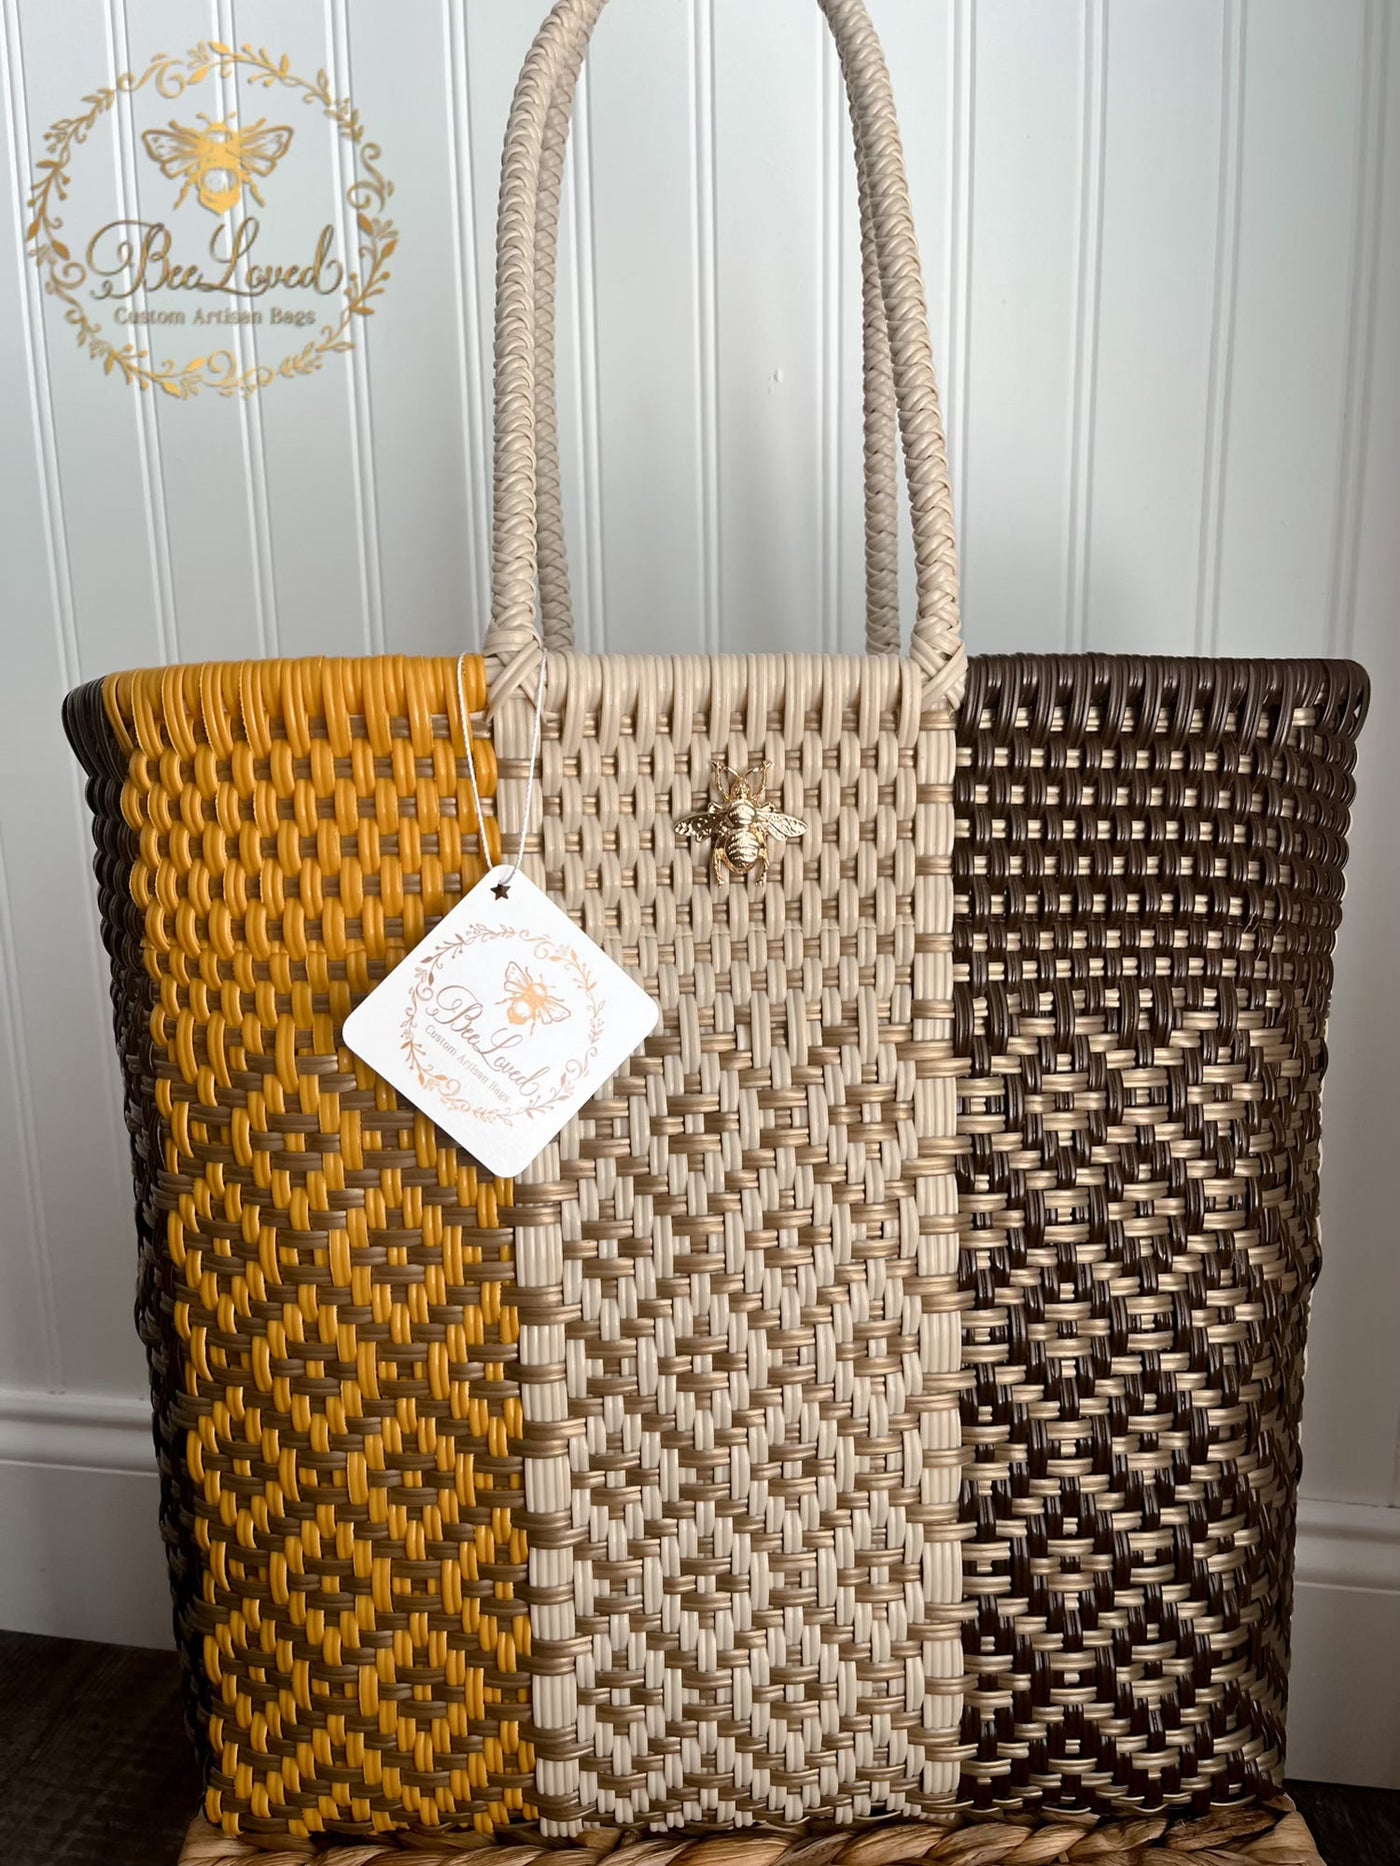 BeeLoved Custom Artisan Bags and Gifts Handbags Medium Shades of Fall Beech Bag